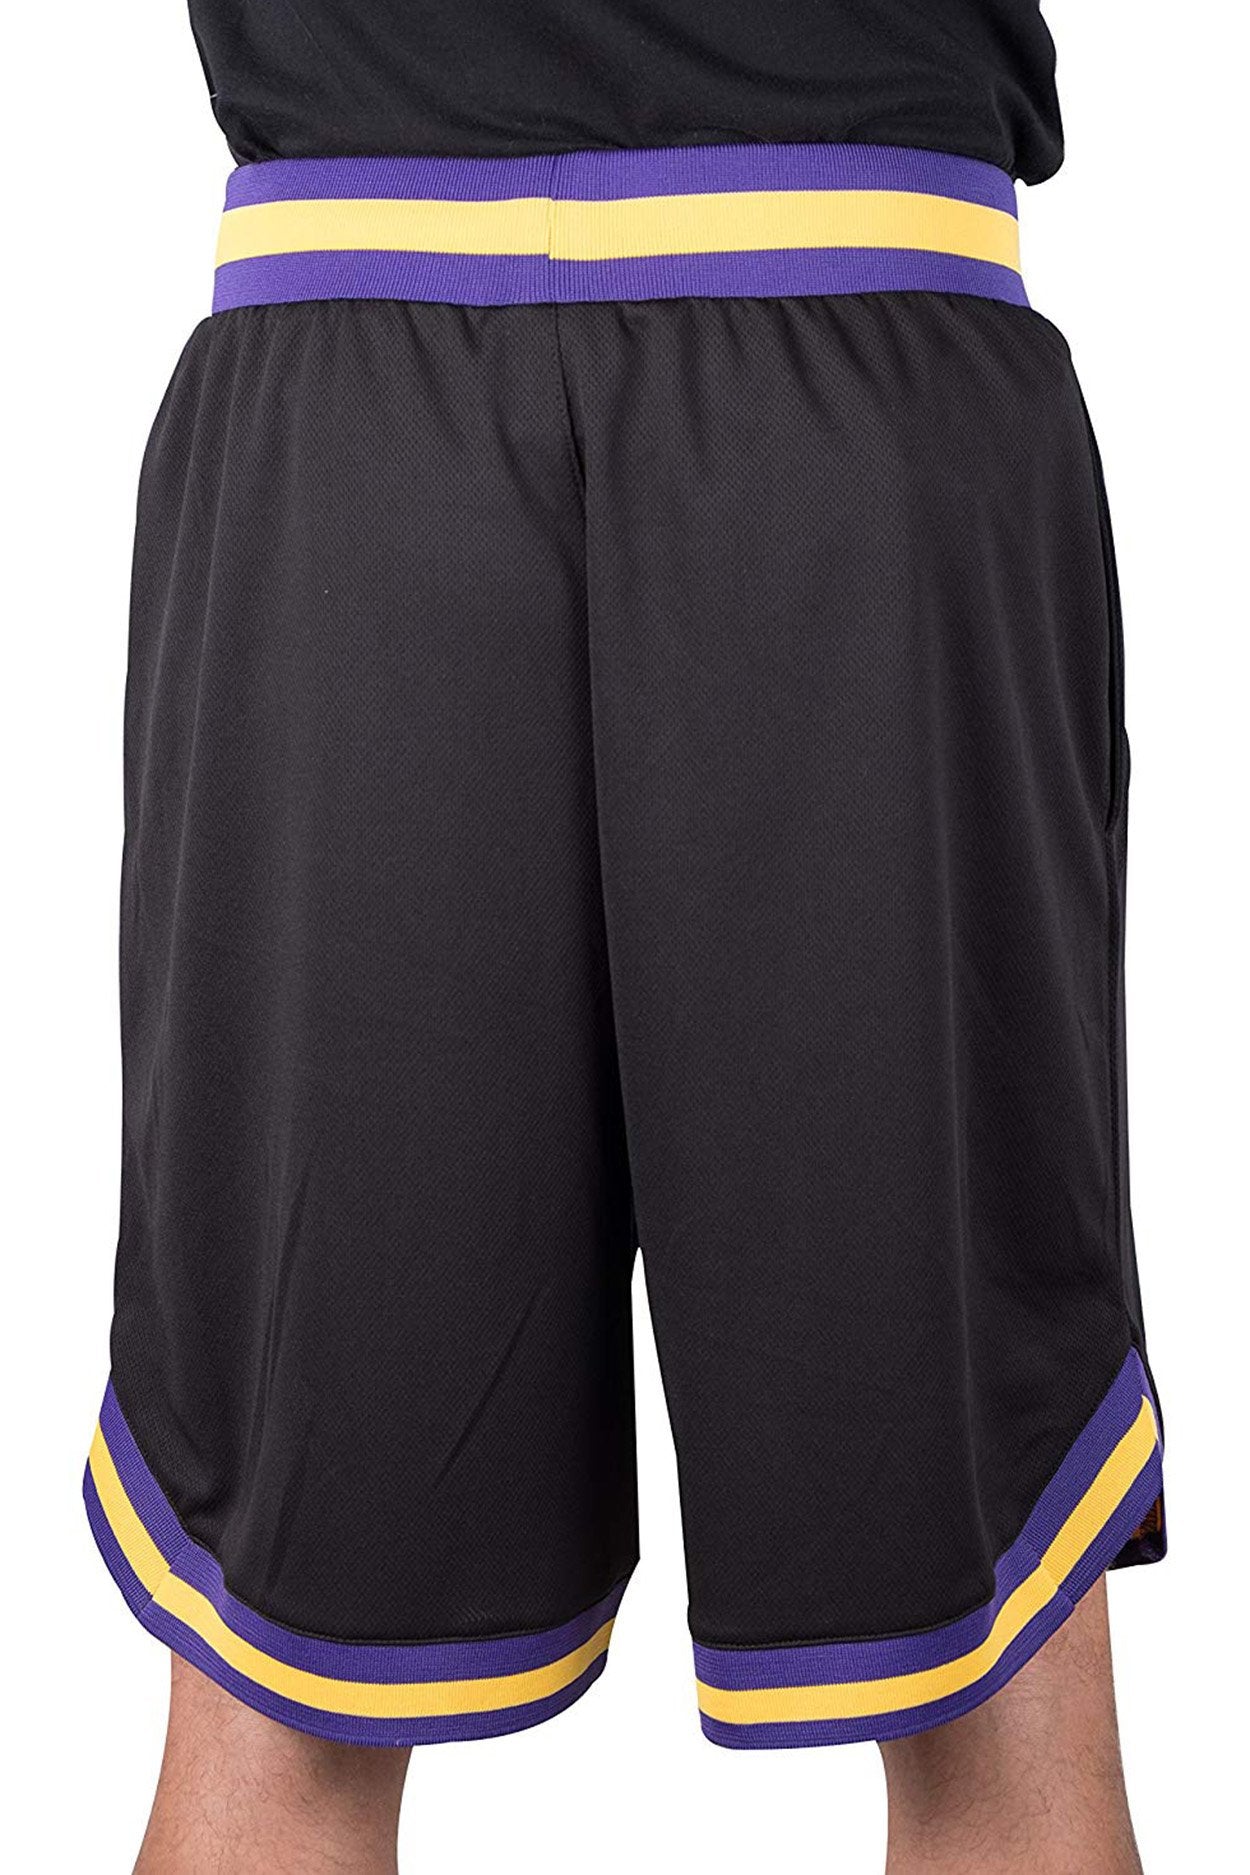 NBA Los Angeles Lakers Men's Basketball Shorts|Los Angeles Lakers